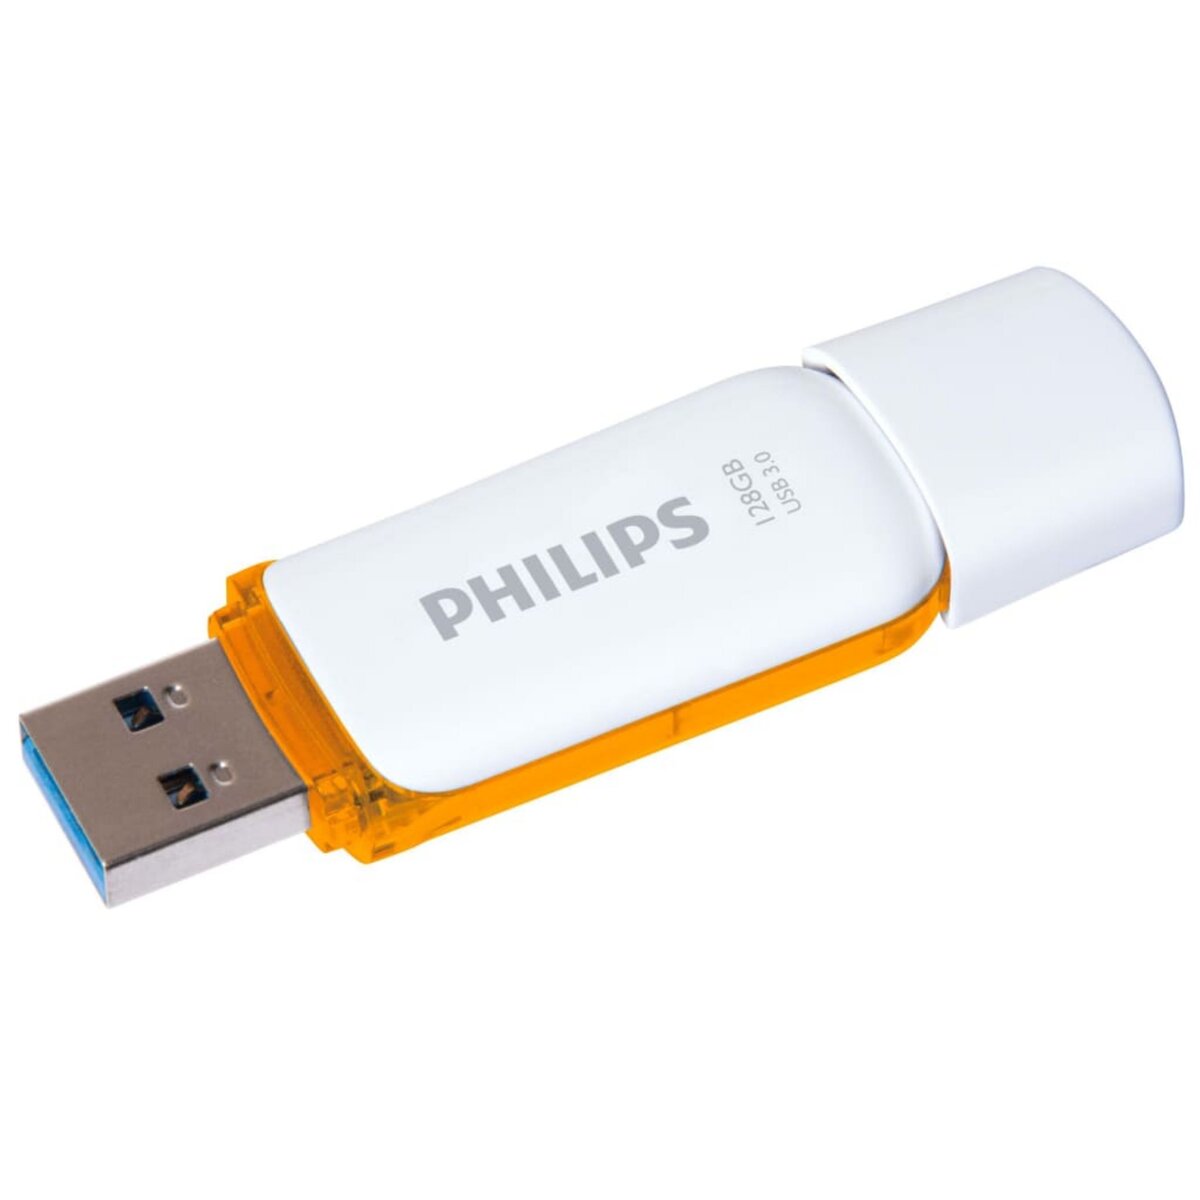 Philips Philips Cle USB 3.0 Snow 128 Go Blanc et orange pas cher